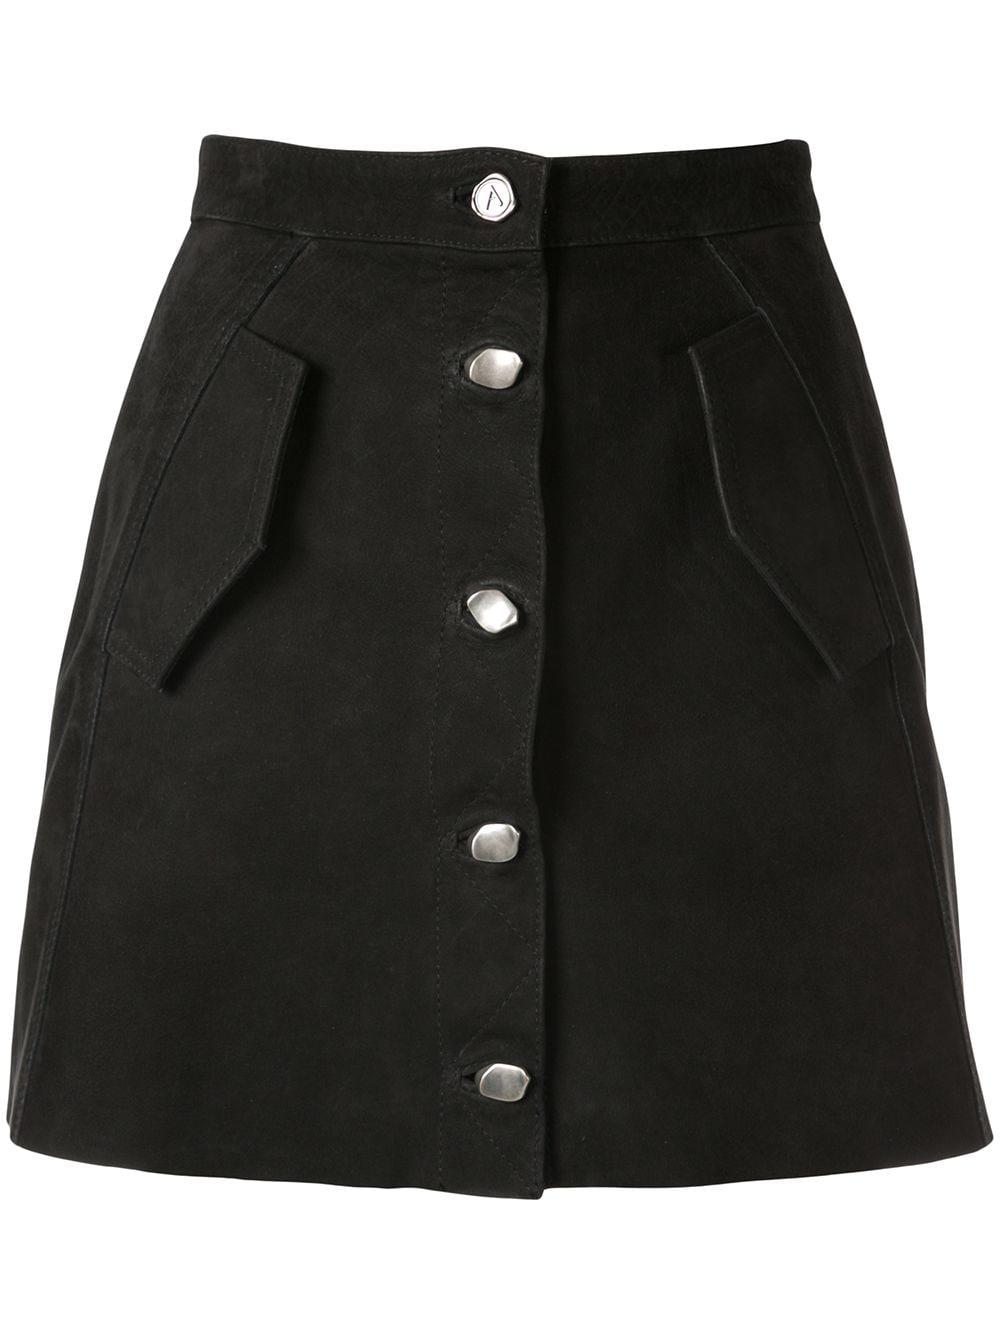 Aje. Leather Mini Skirt in Black - Lyst